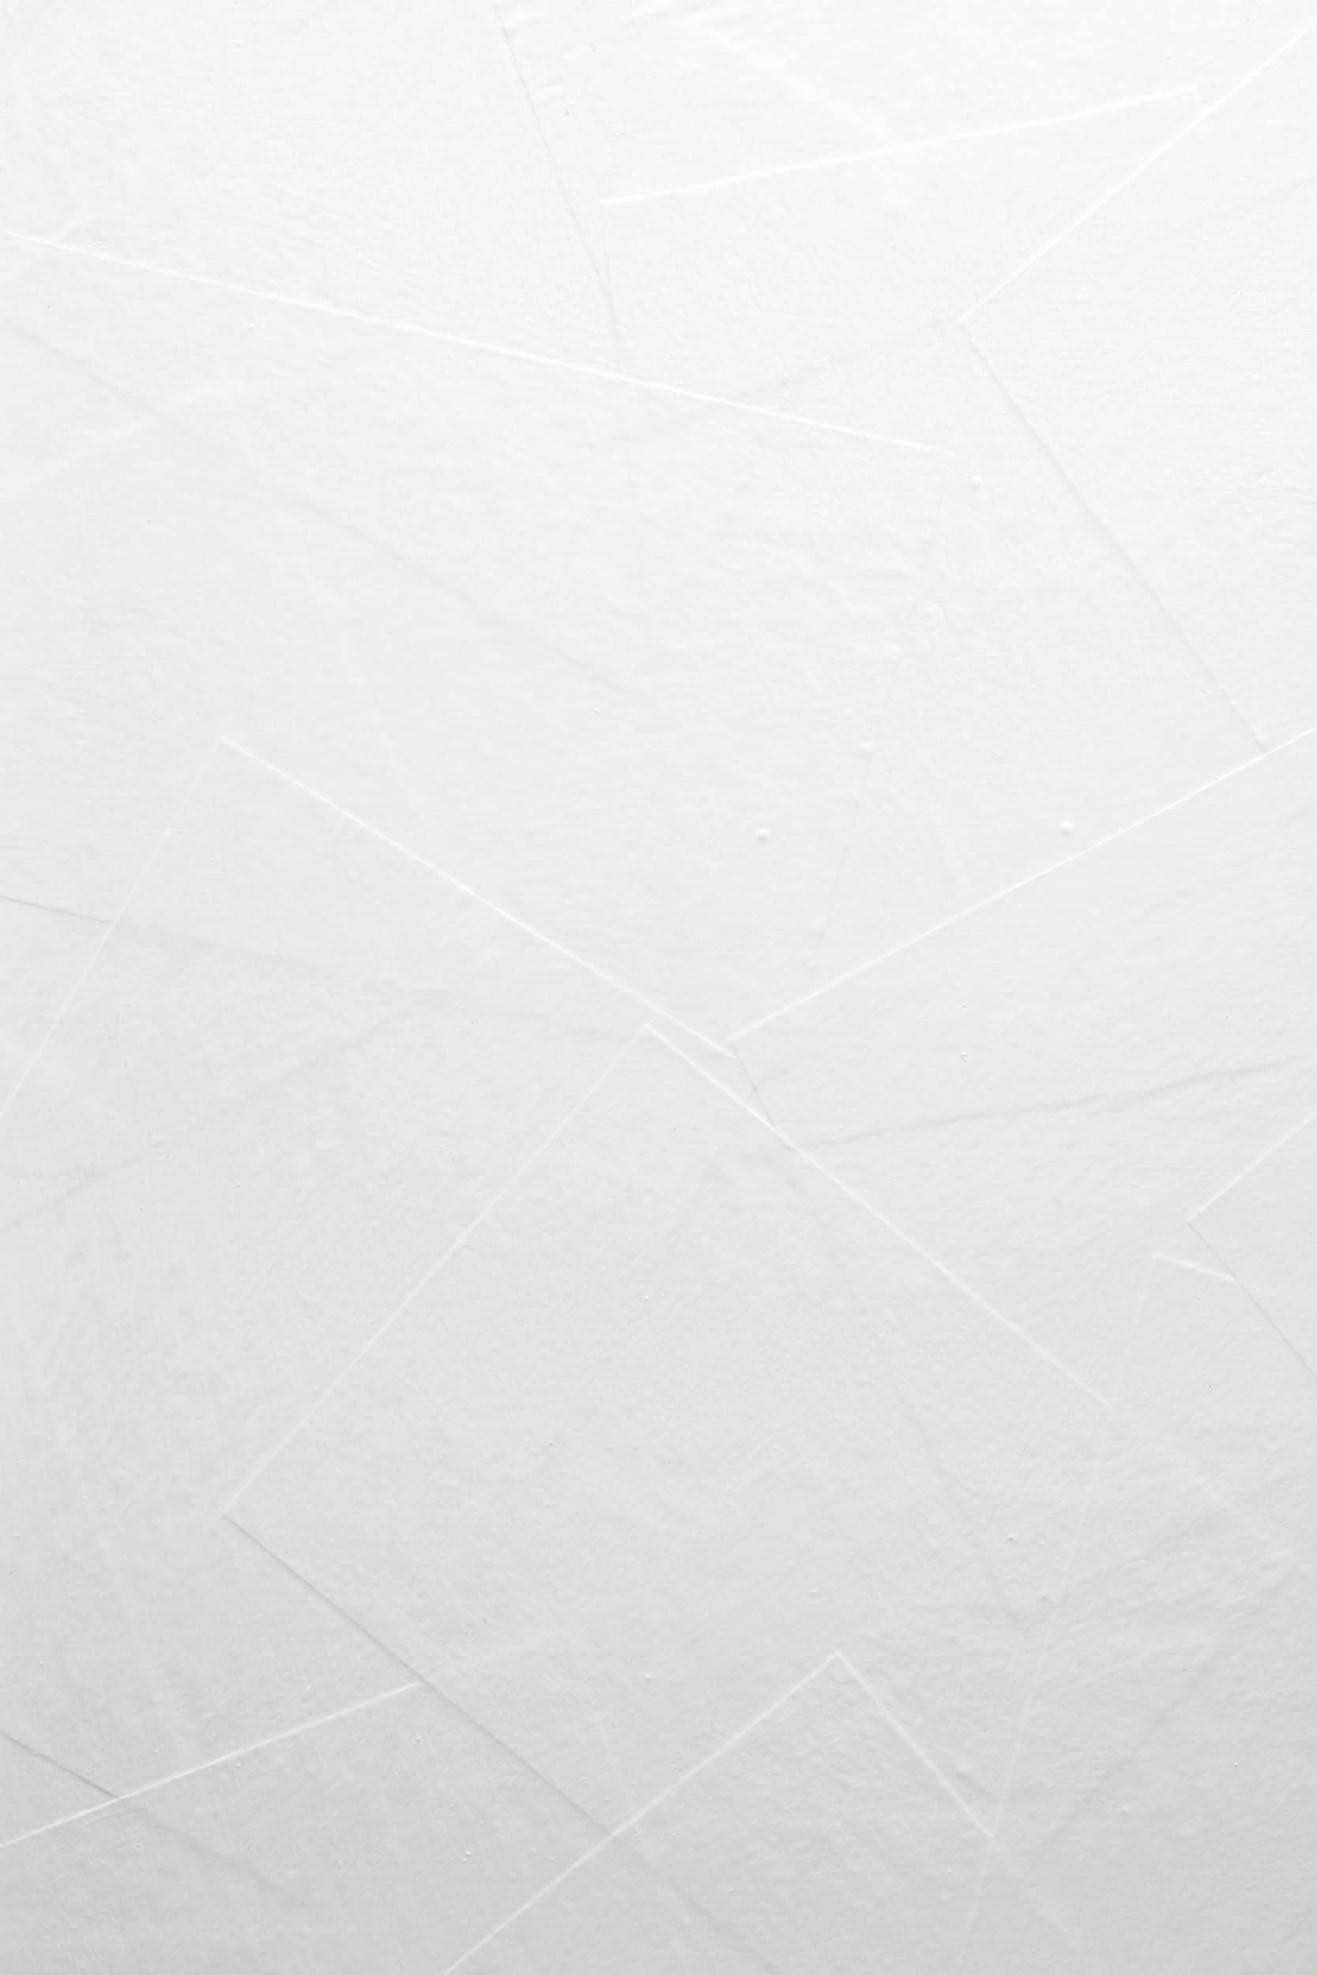 Light Grey Wallpaper Group (67+), HD Wallpapers